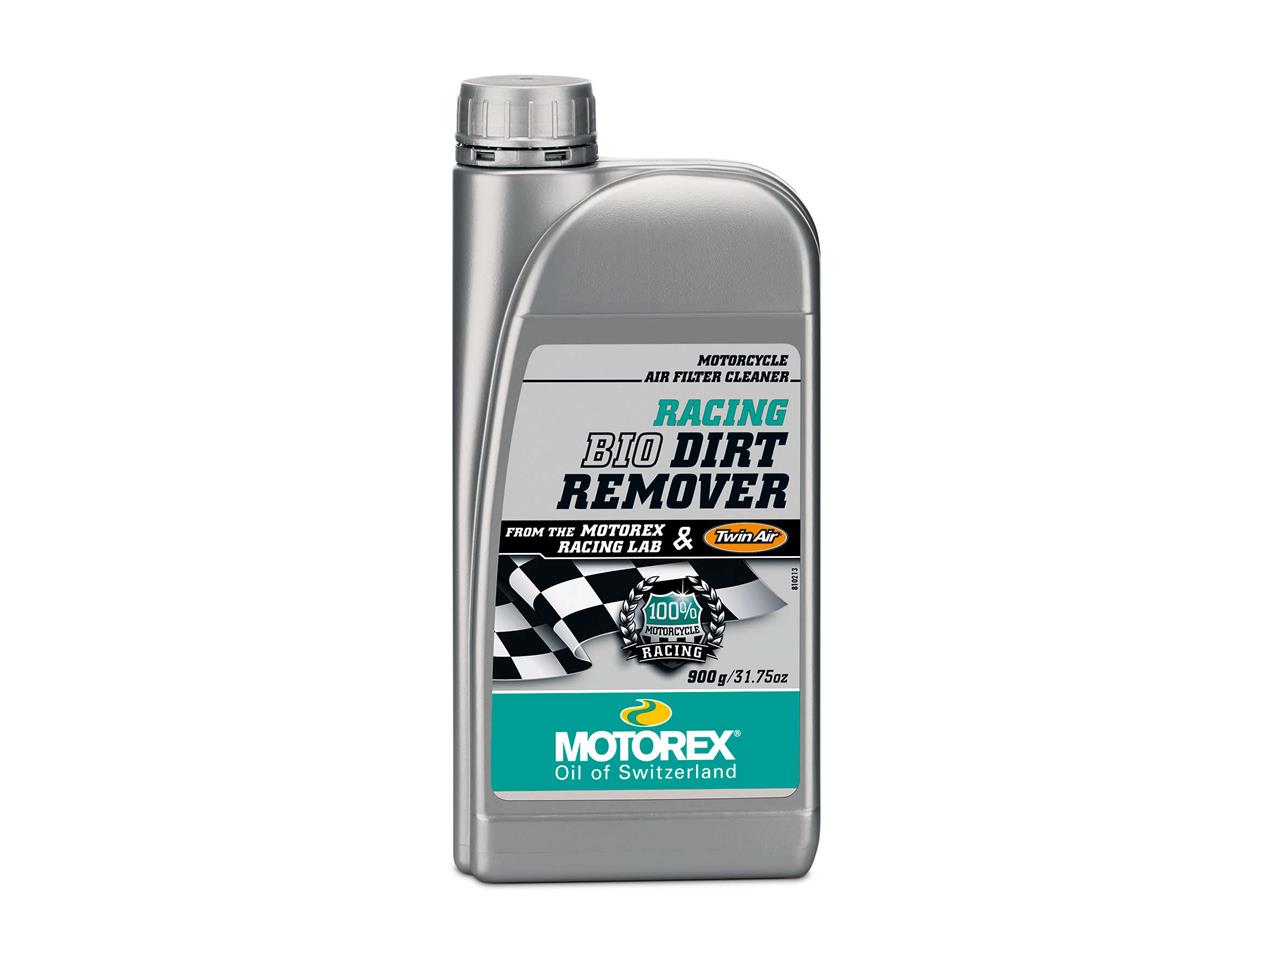 Nettoyant filtre à air marque Motorex Racing Dirt Bio 900g